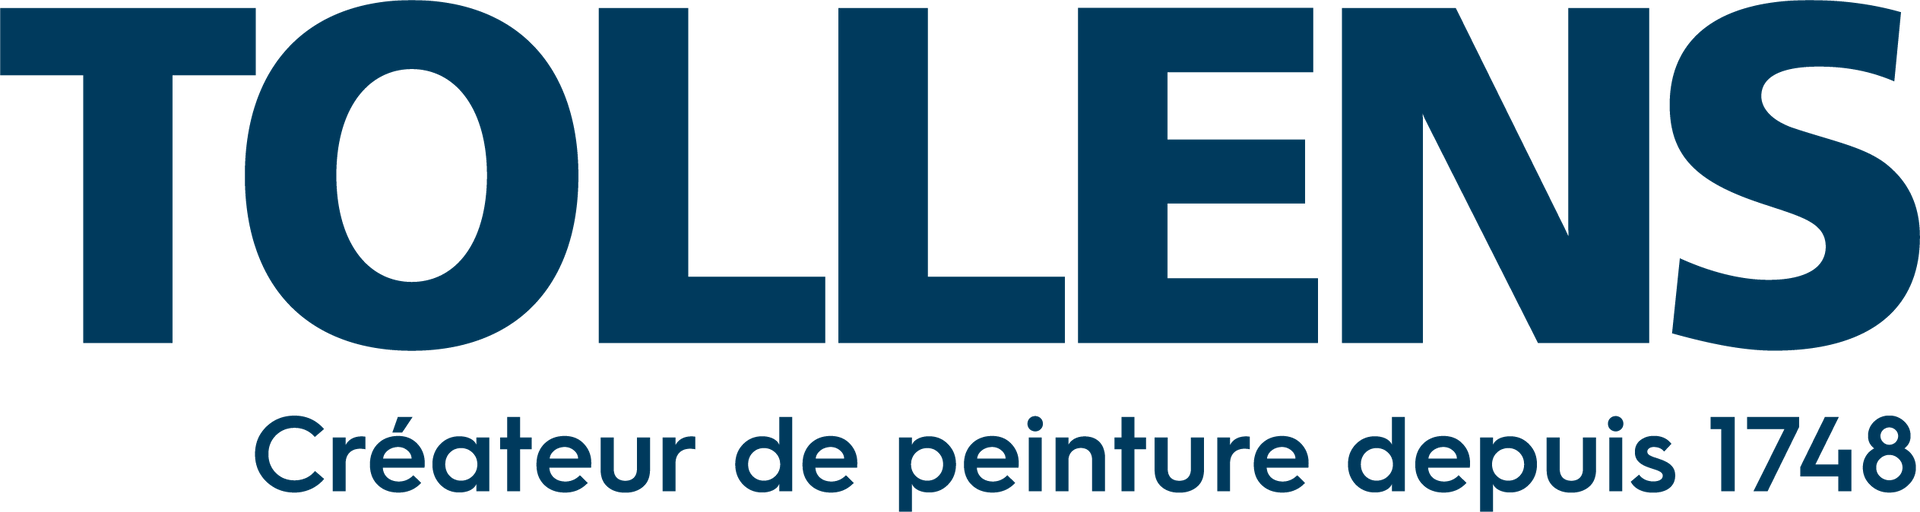 Logo Tollens